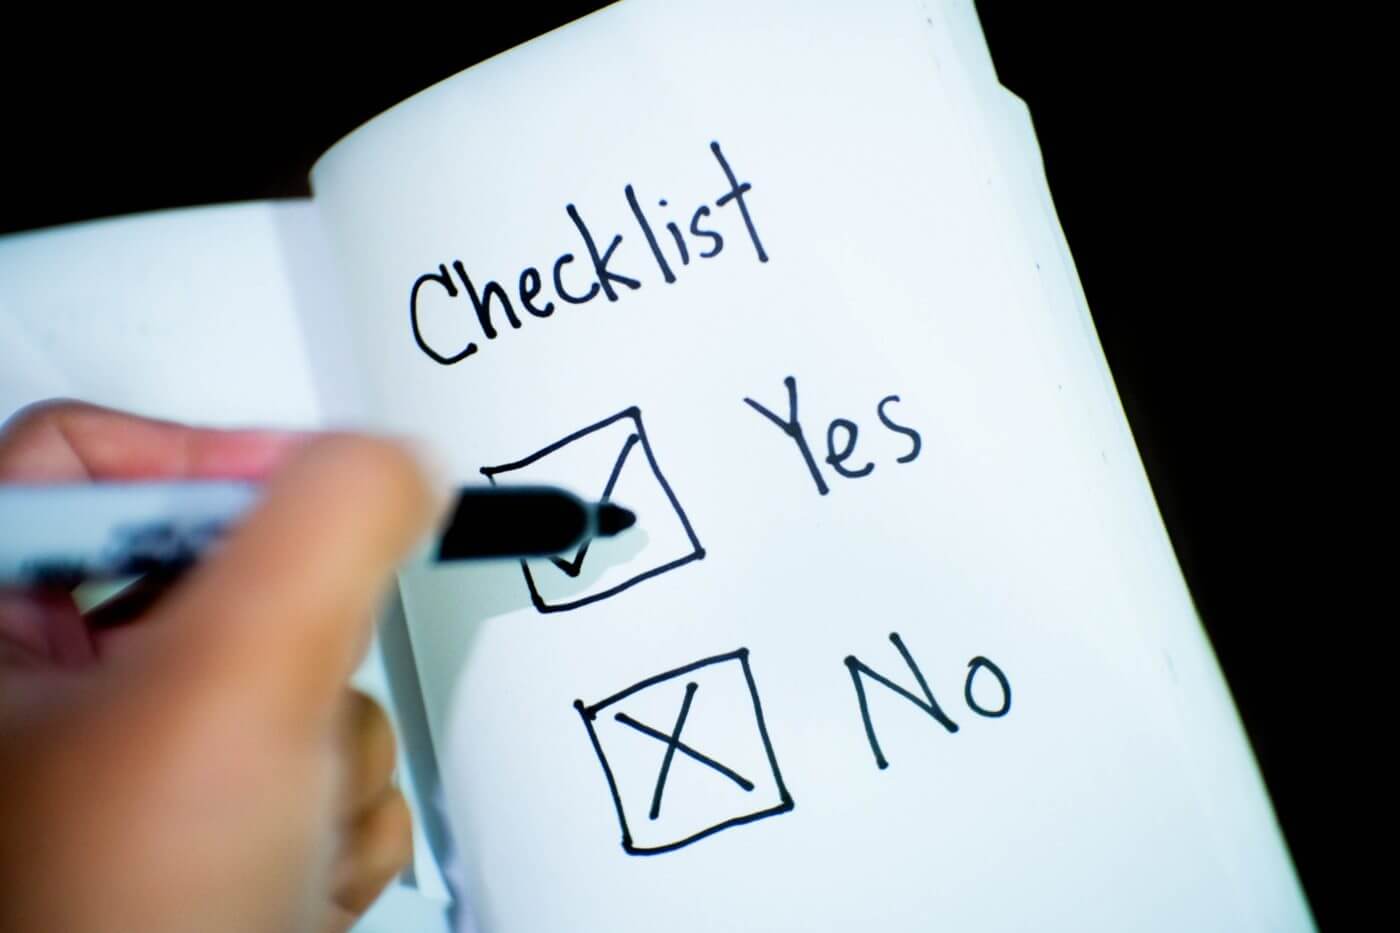 Image of a checklist